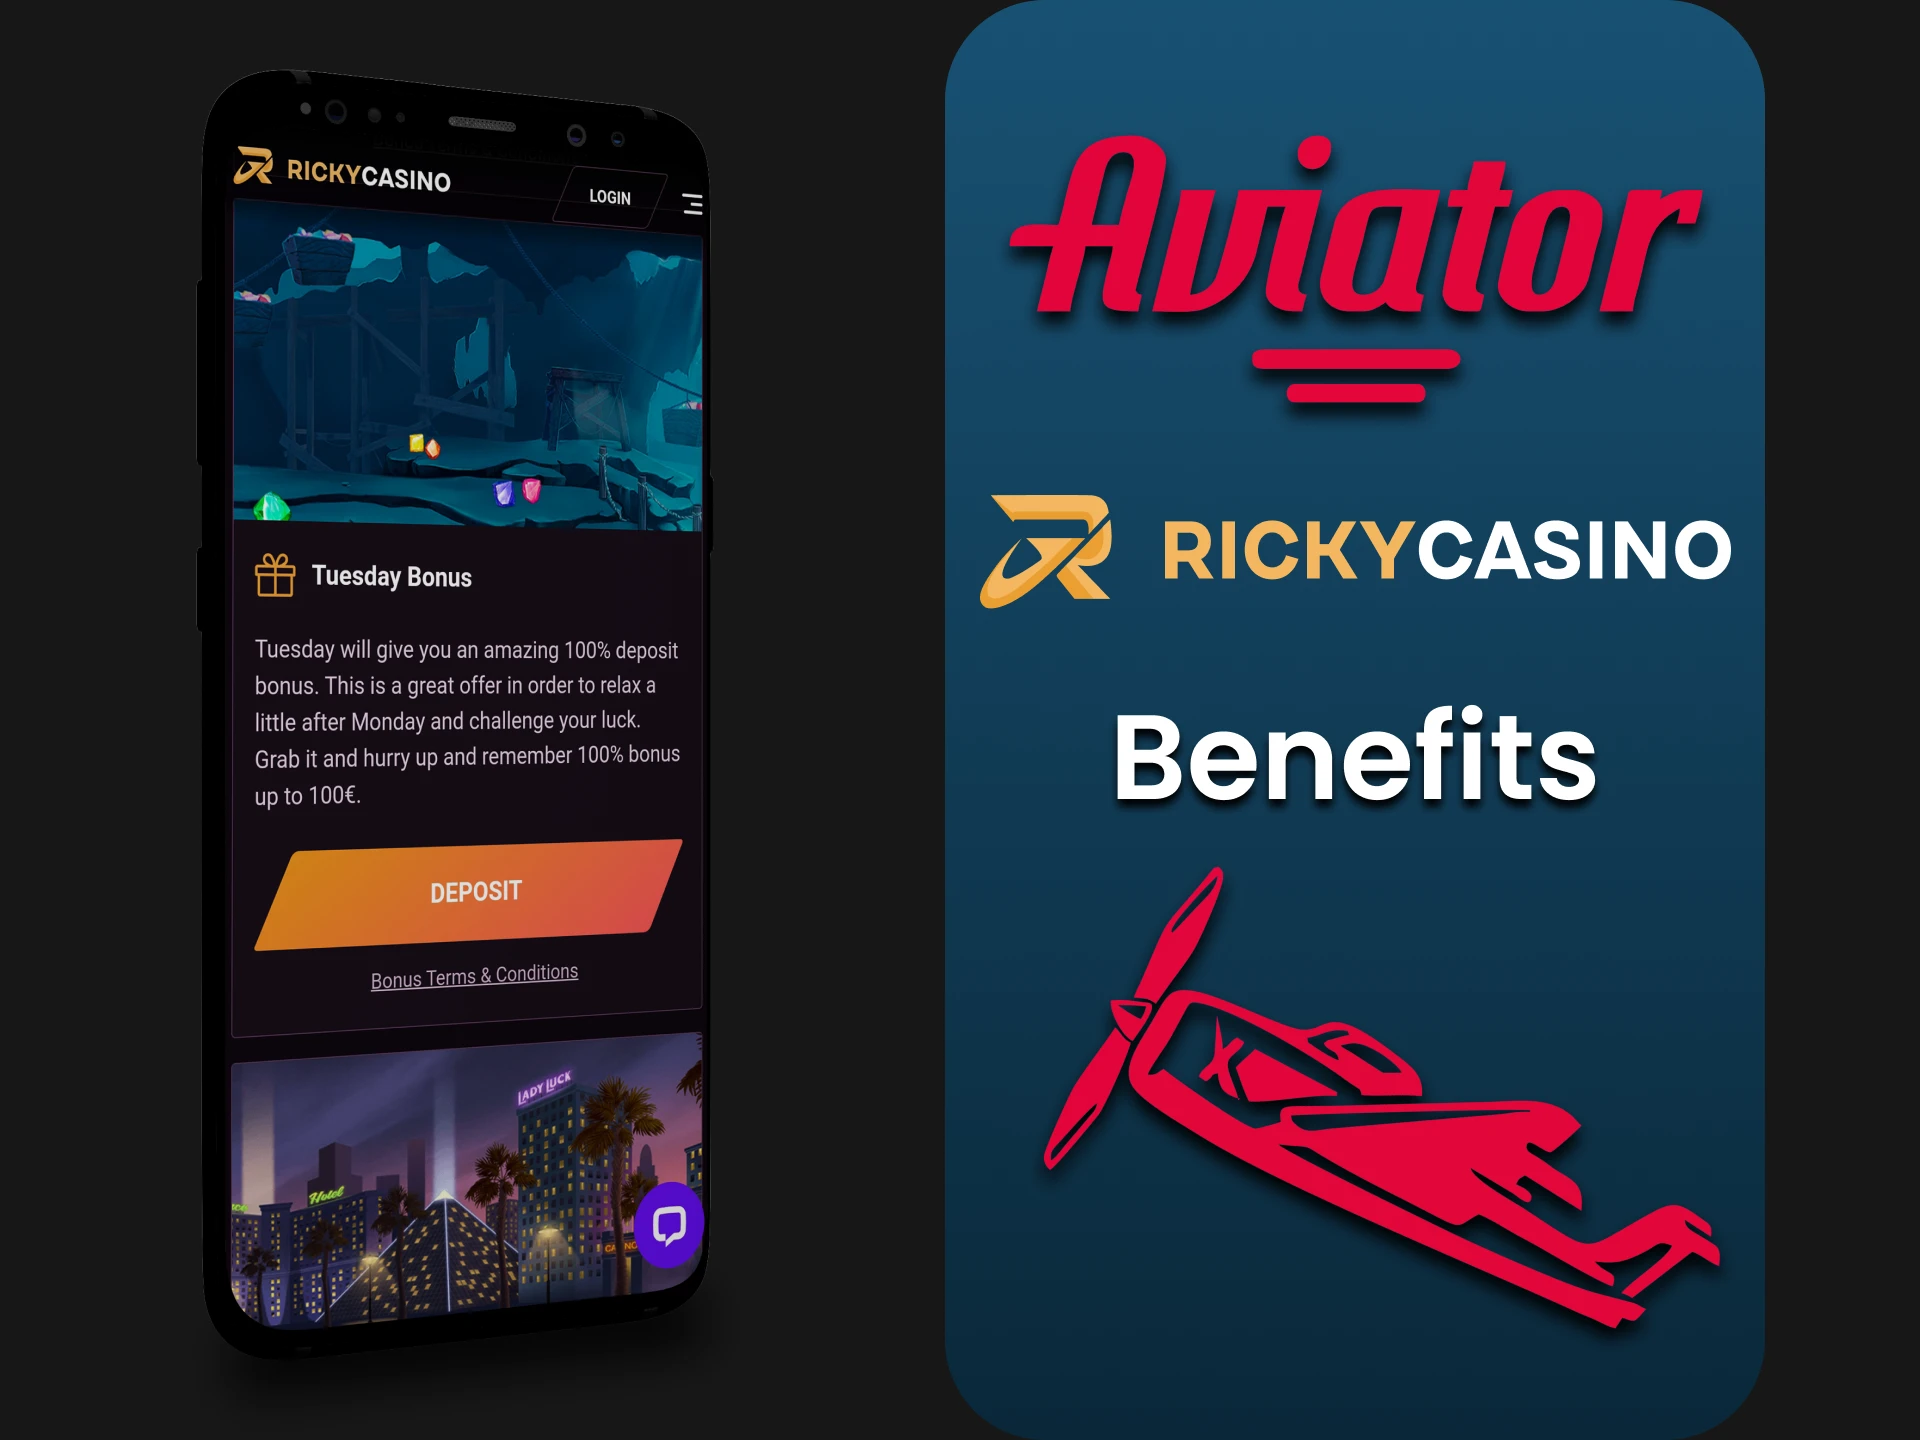 The Ricky Casino app has many benefits for Aviator games.